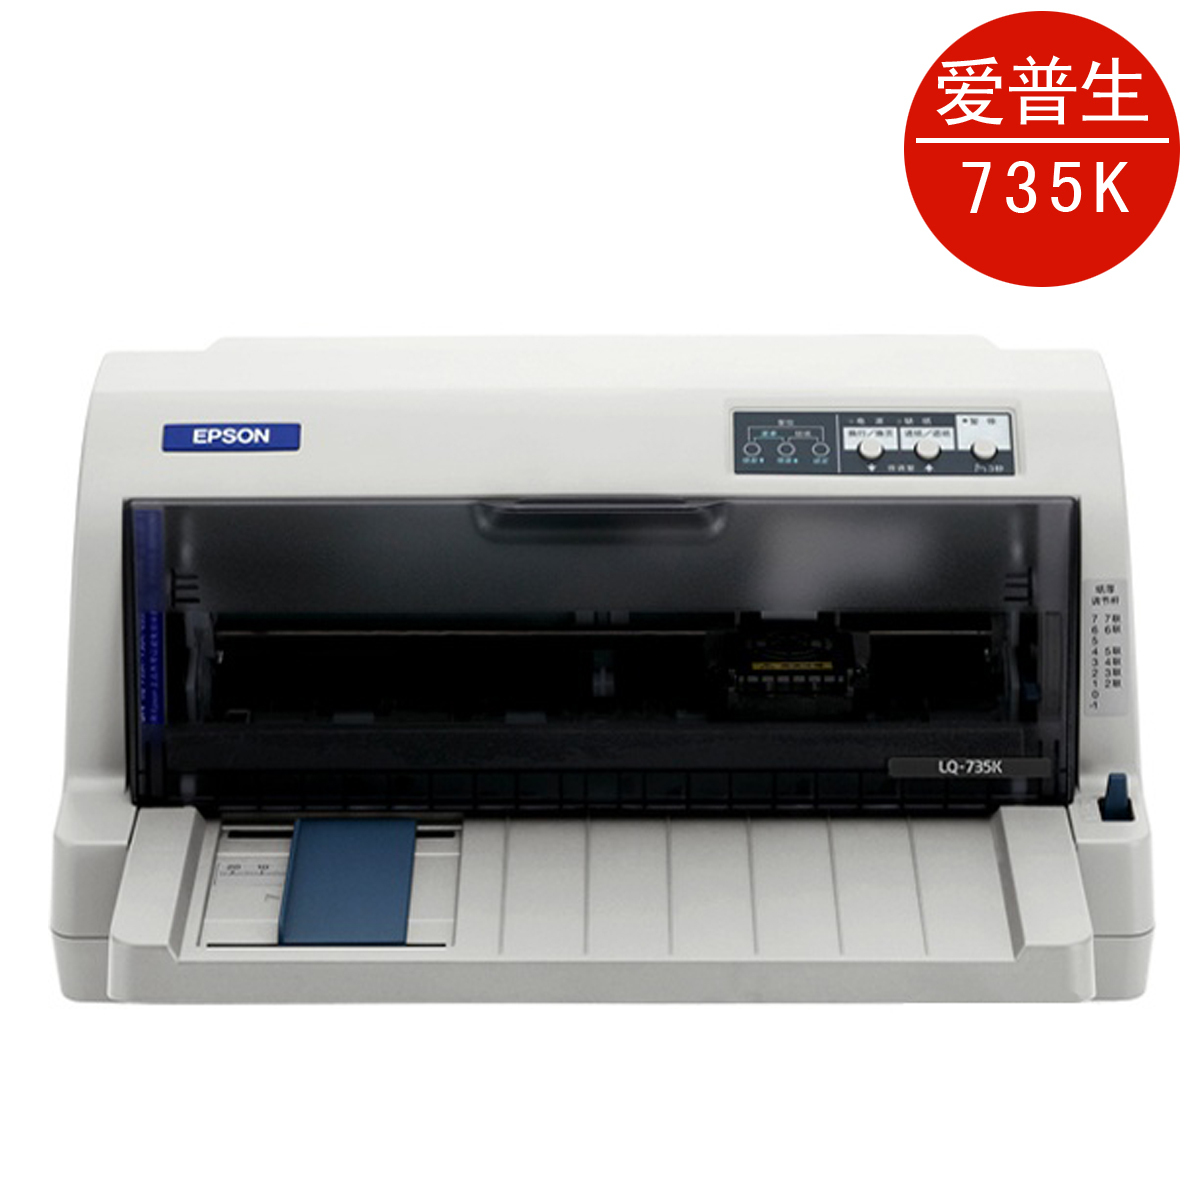 Hp 1000 Printer